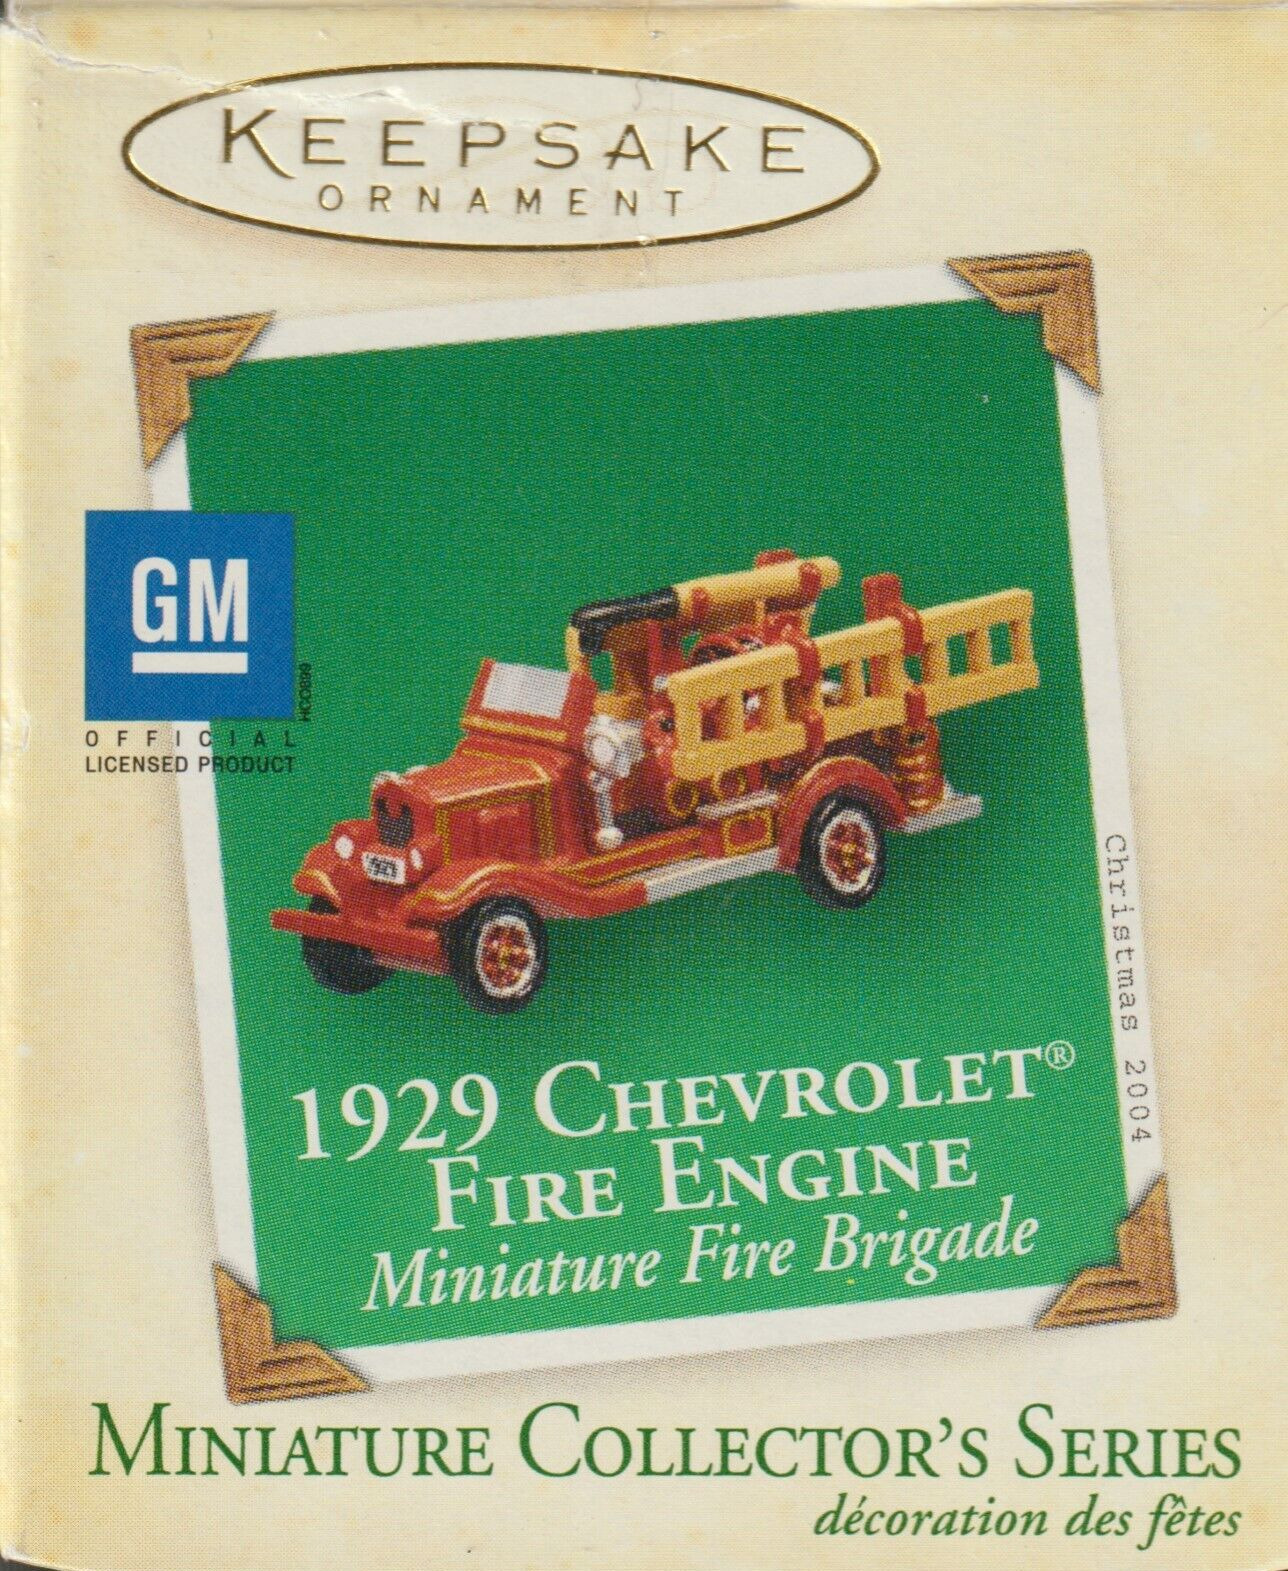 Hallmark Keepsake 2004 Miniature Ornament 1929 Chevrolet Fire Engine NIB New